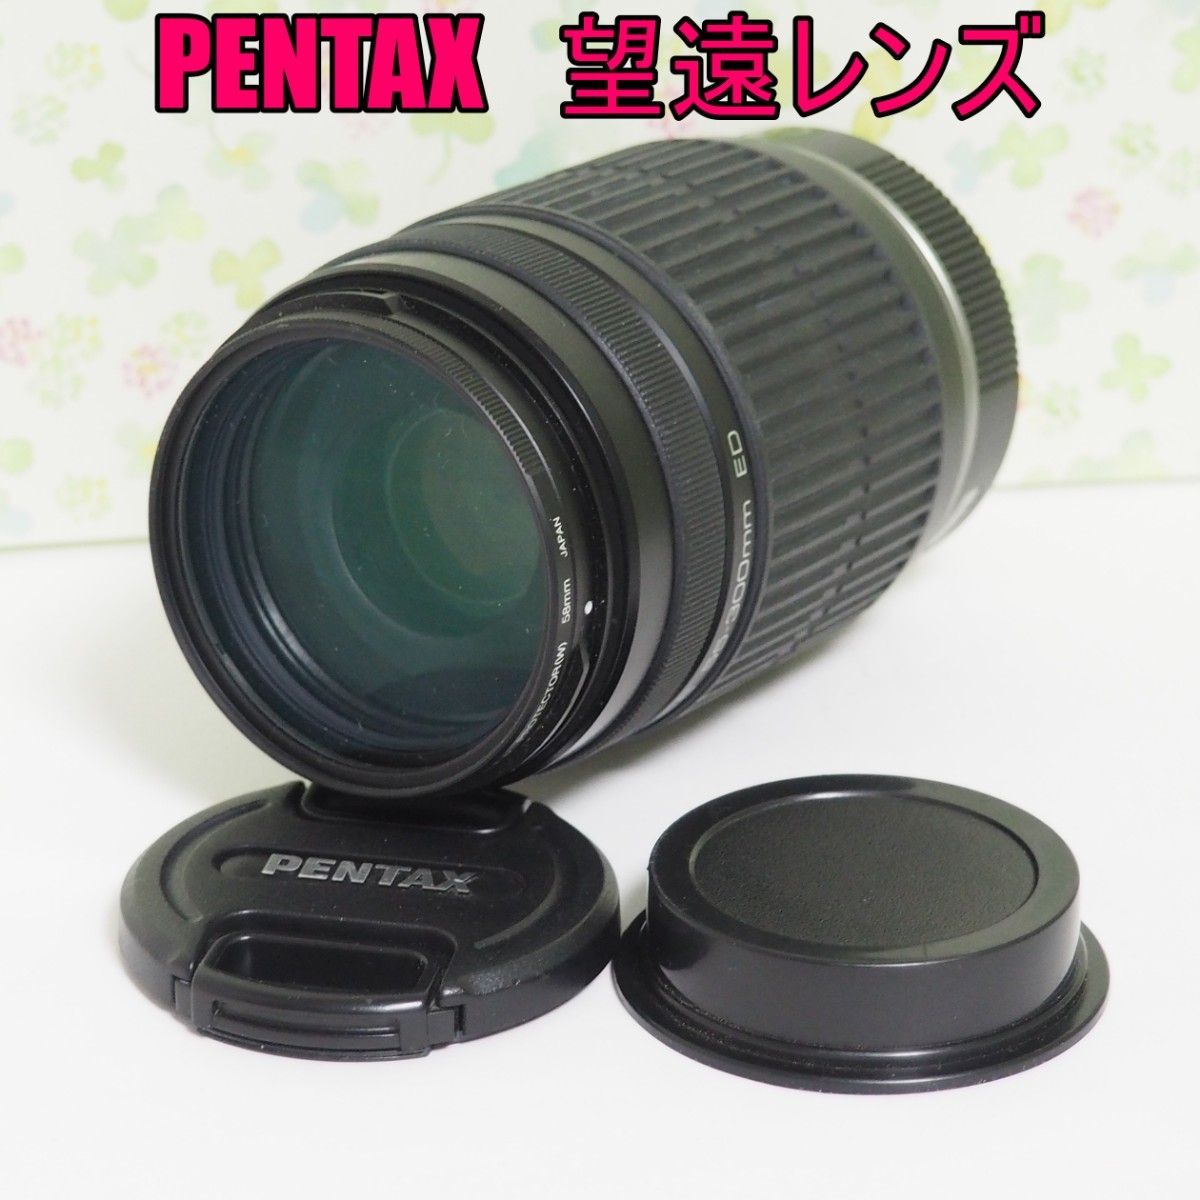 PENTAX純正 55-300mm 望遠レンズ 美品-